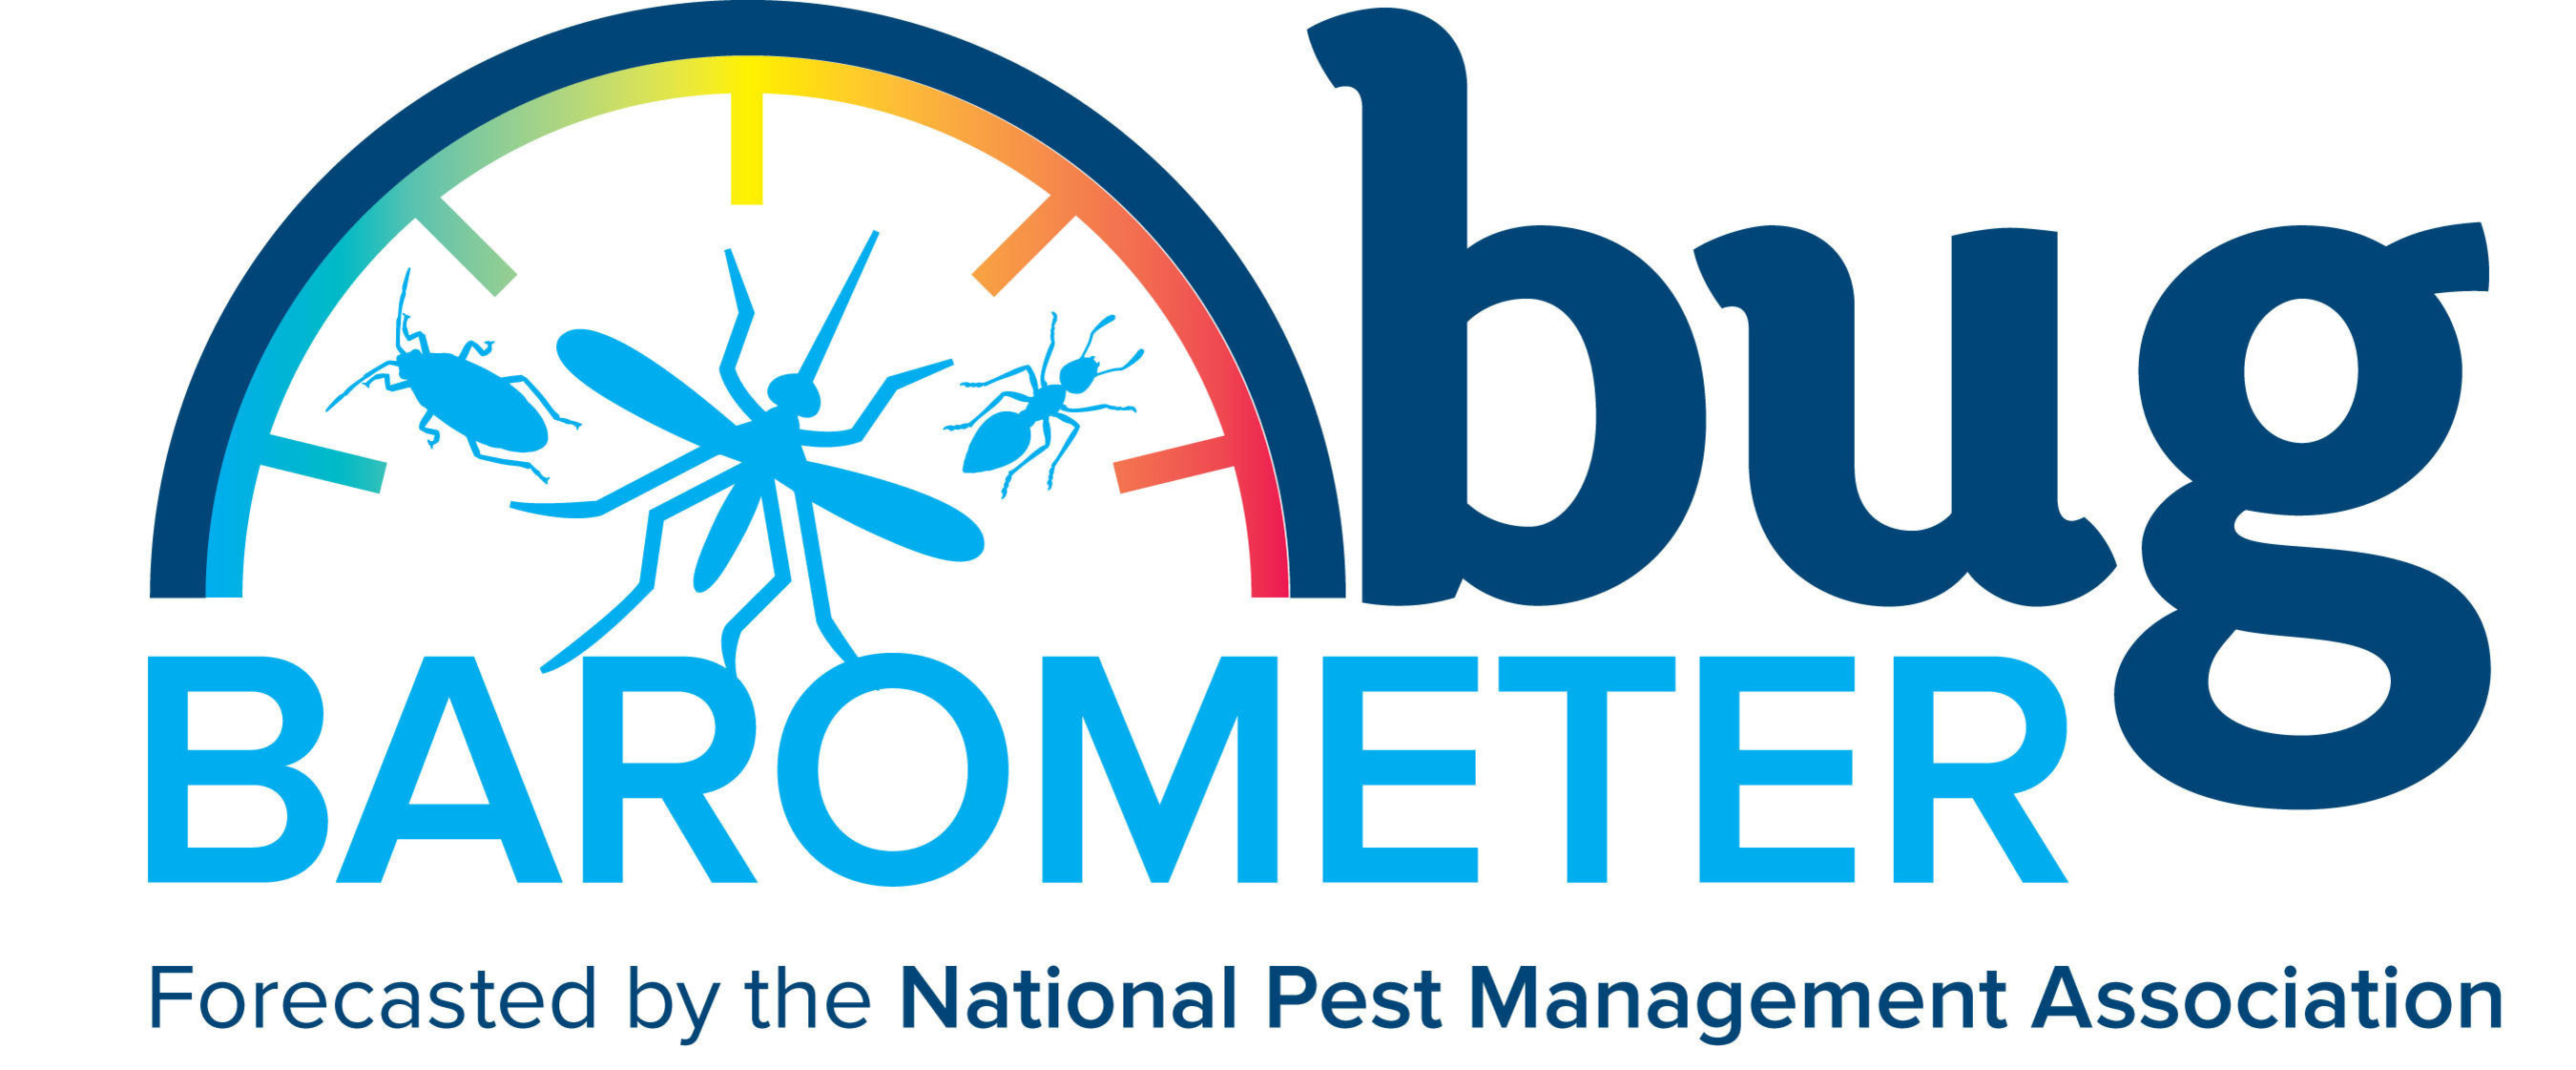 Bug Barometer: Forecasted by the National Pest Management Association